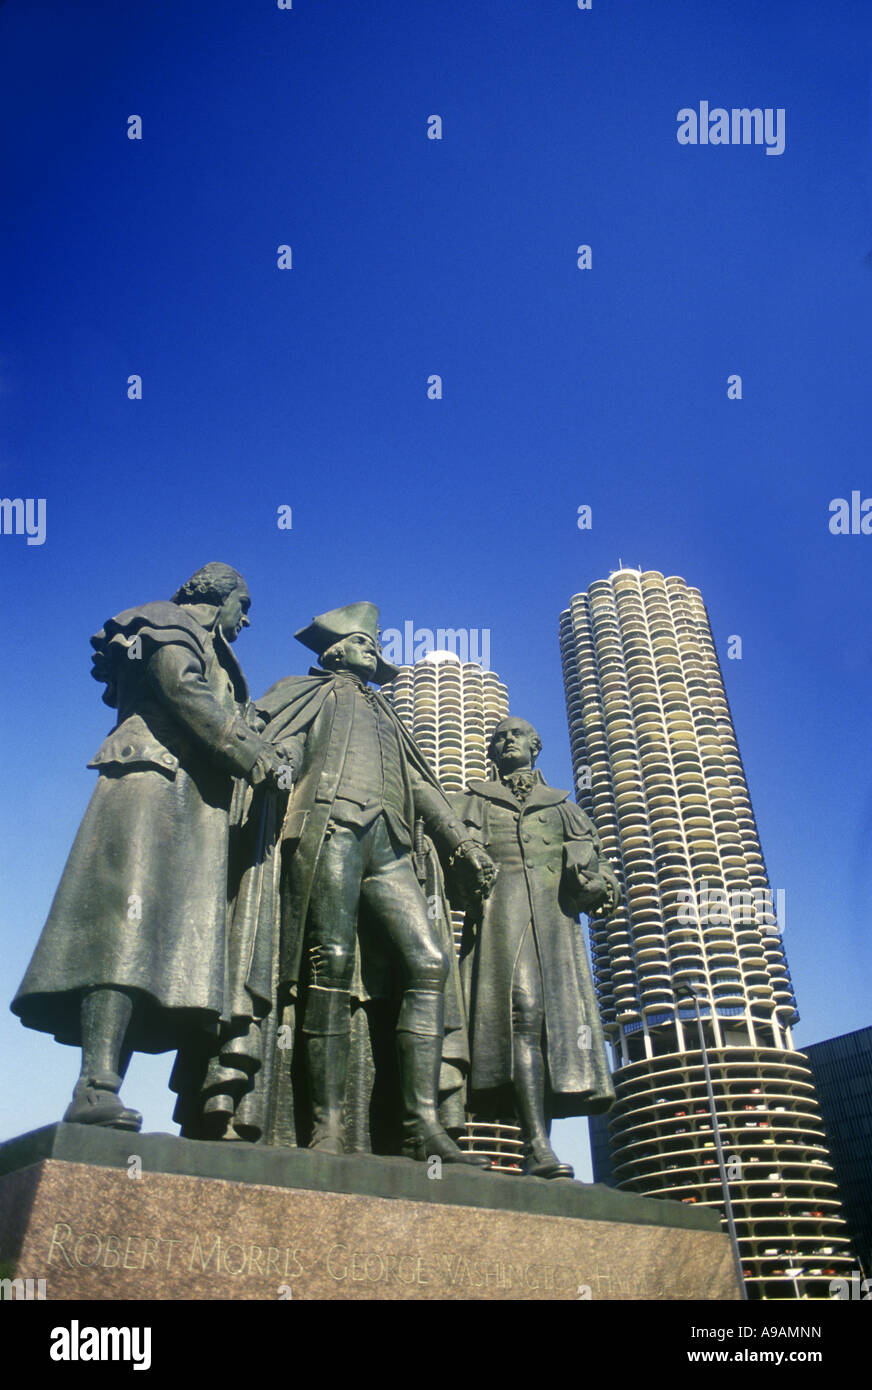 TAFT STATUE OF WASHINGTON MORRIS AND SALOMON MARINA CITY CHICAGO ILLINOIS  USA Stock Photo - Alamy